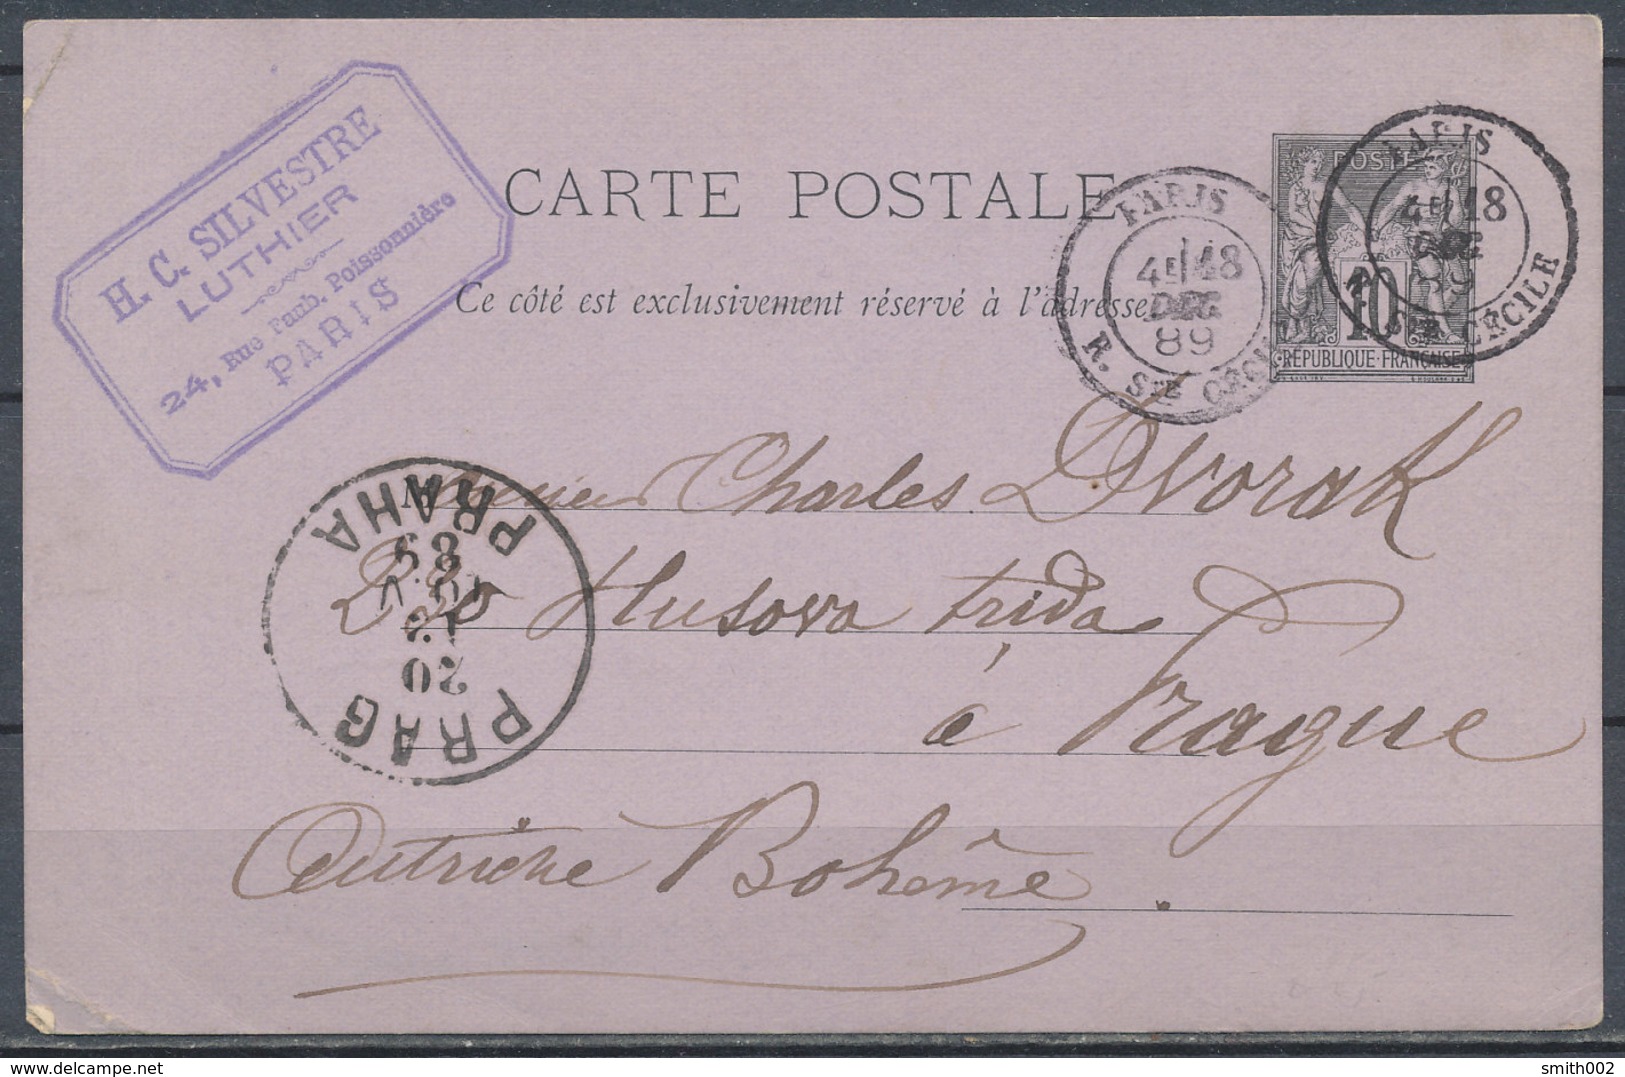 FRANCE - 1889 Carte Postale To Bohemie - Documentos Del Correo